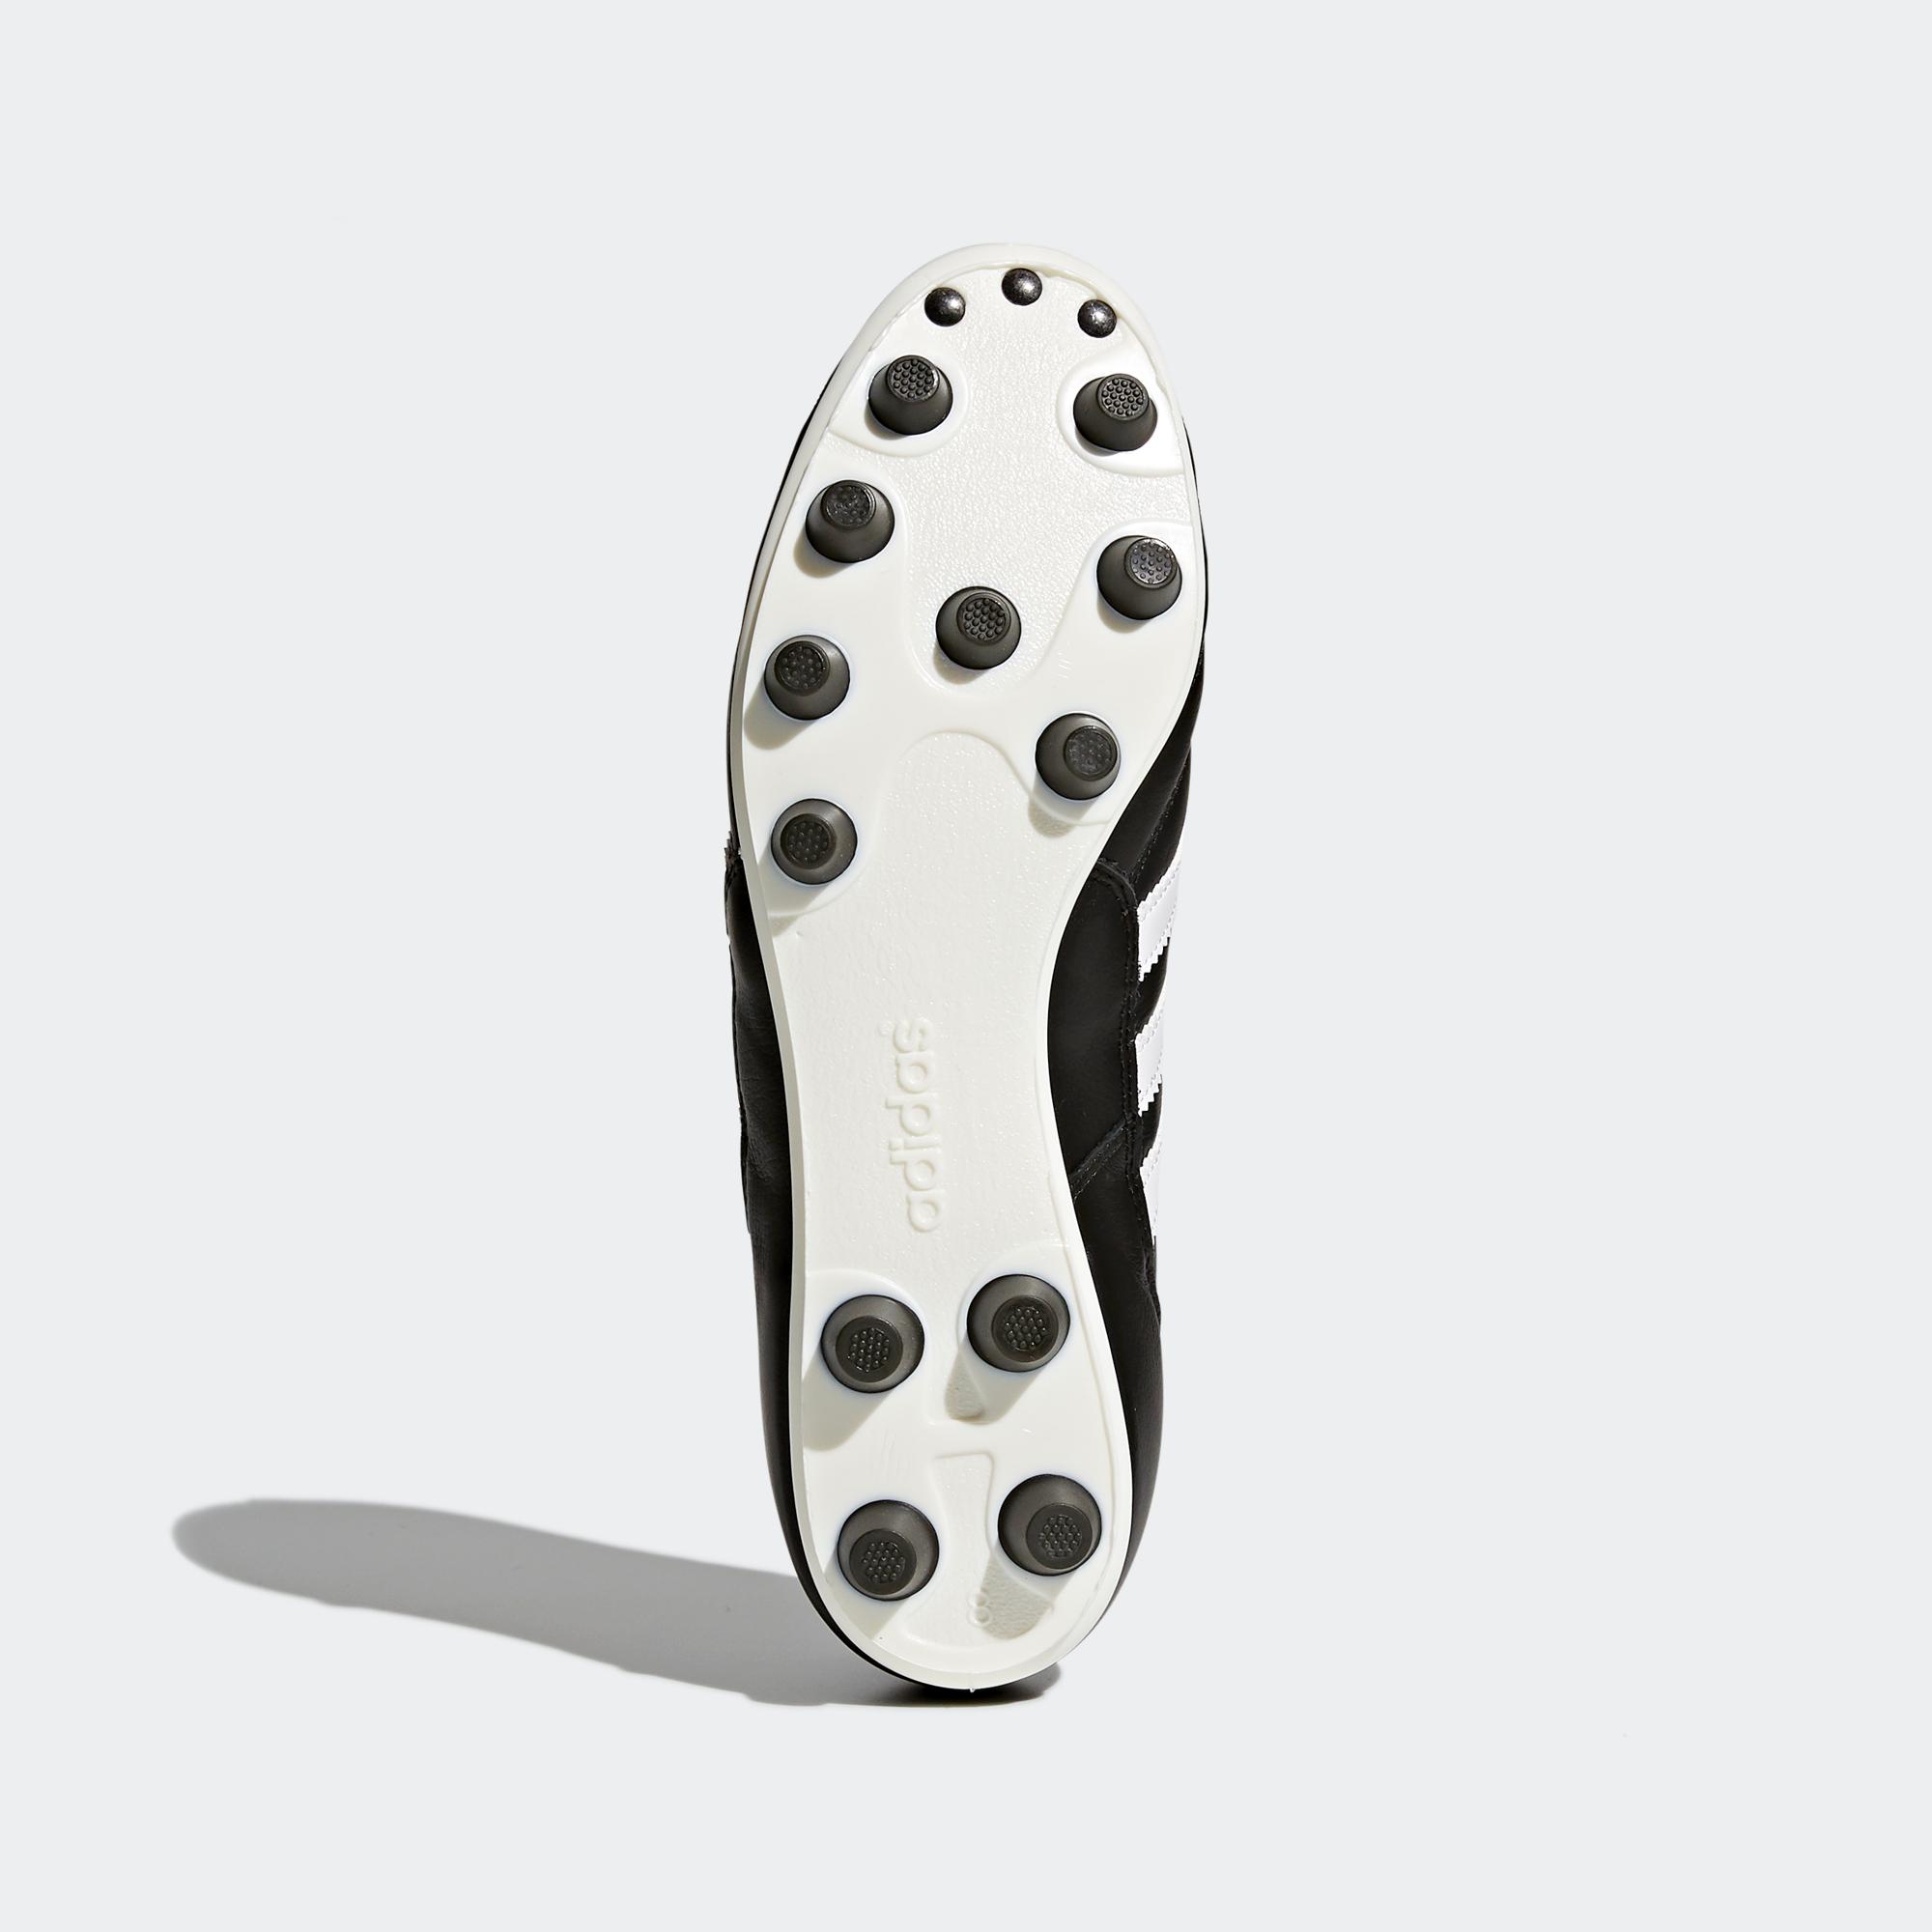 COPA MUNDIAL 足球鞋- 男子| adidas(愛迪達)香港官方網上商店